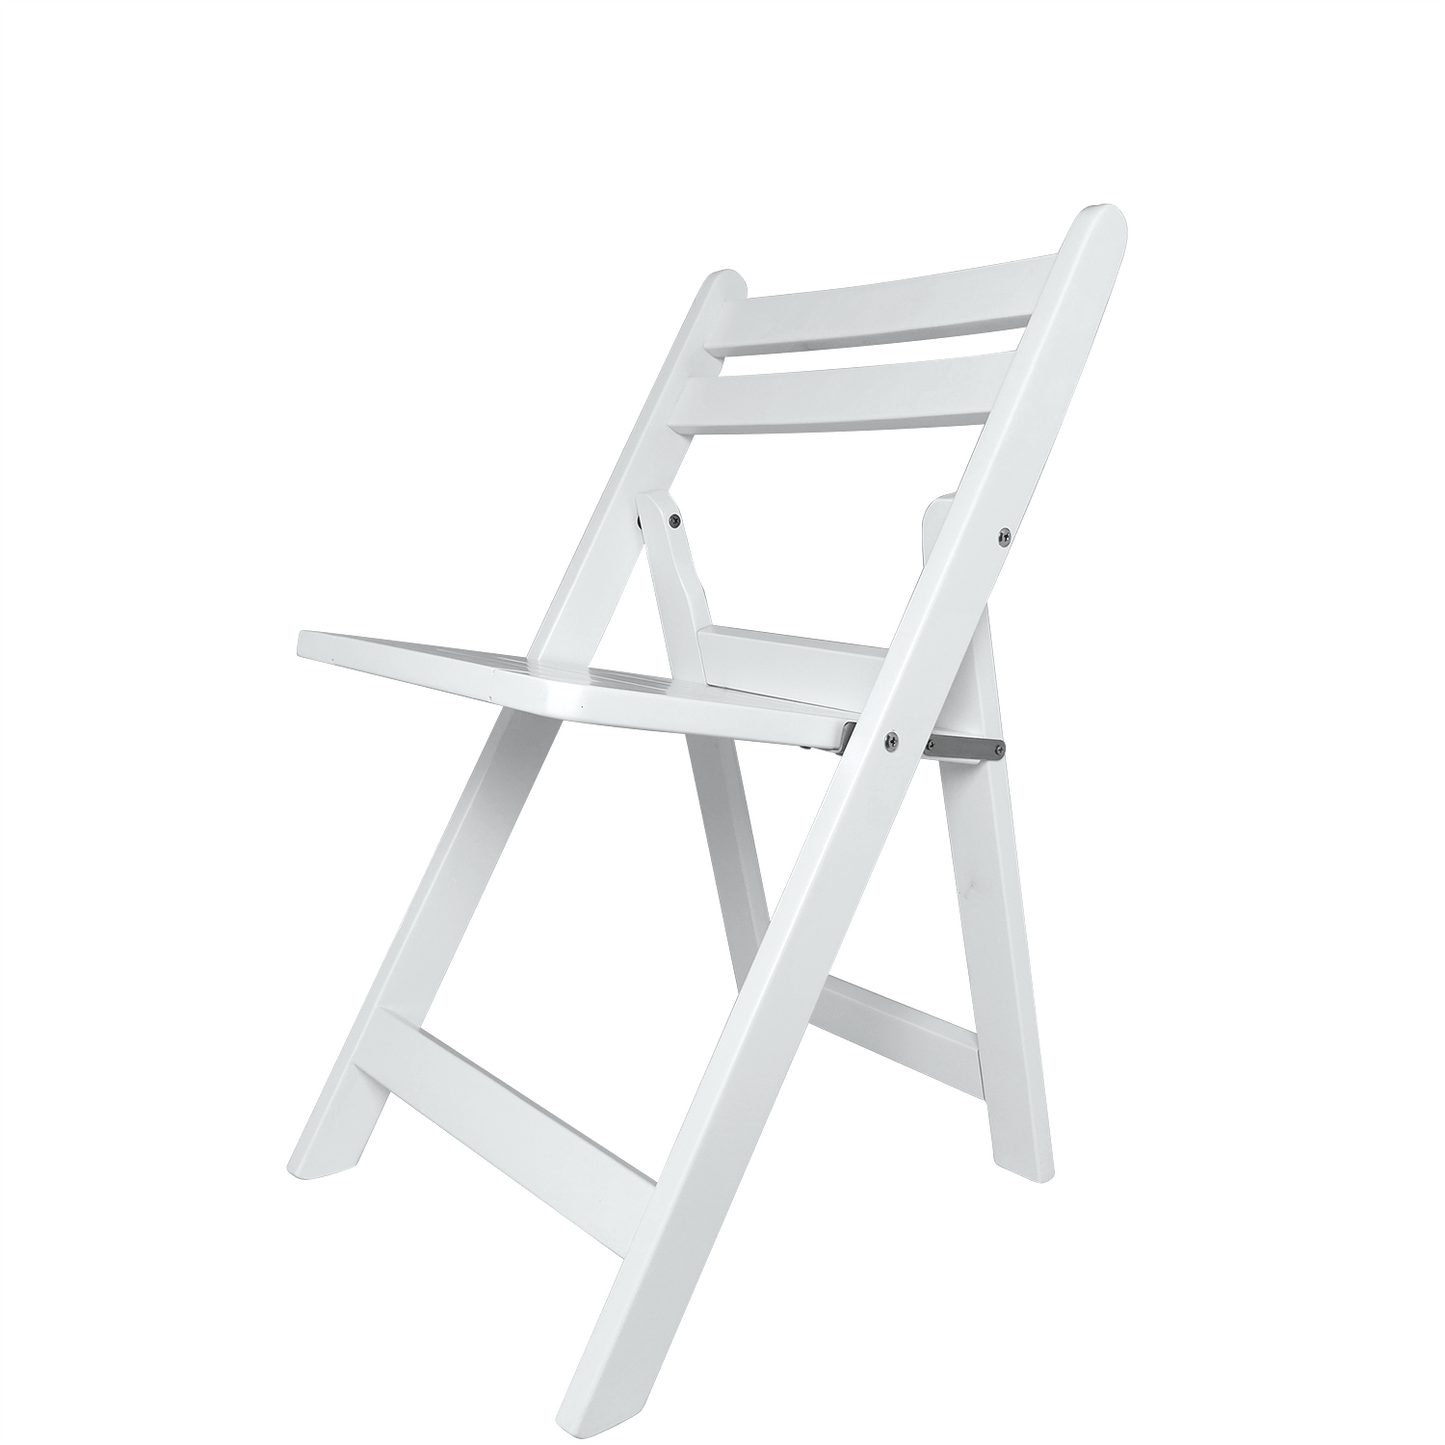 Comfort Leisure Wood Folding Chair(Set of 2),Walnut, 18.1\"x24.8\"x29.5\"